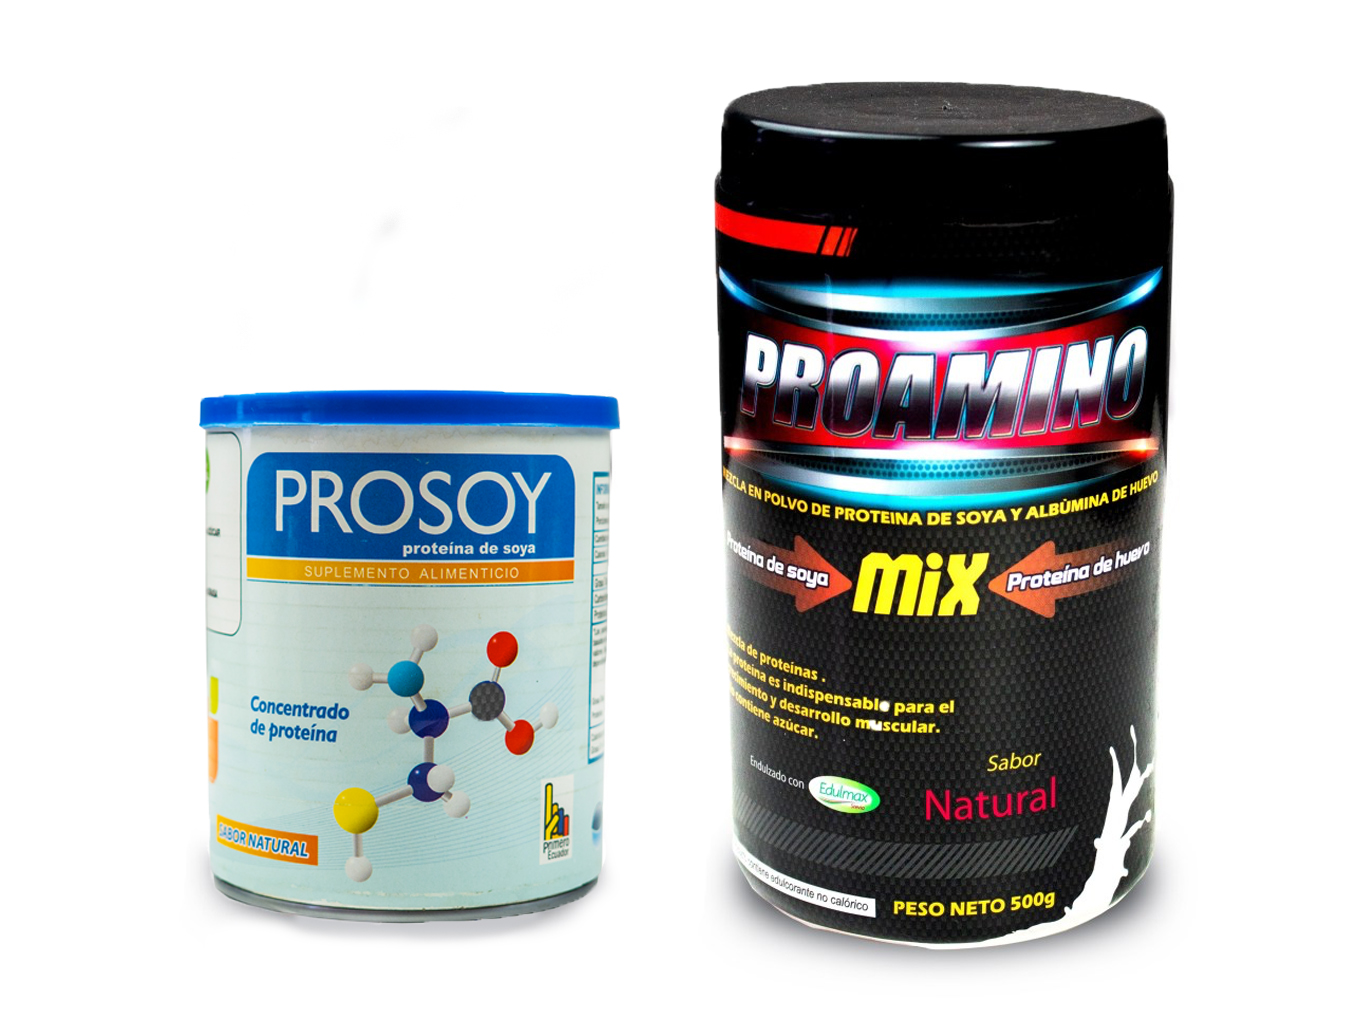 Prosoy / Proamino mix